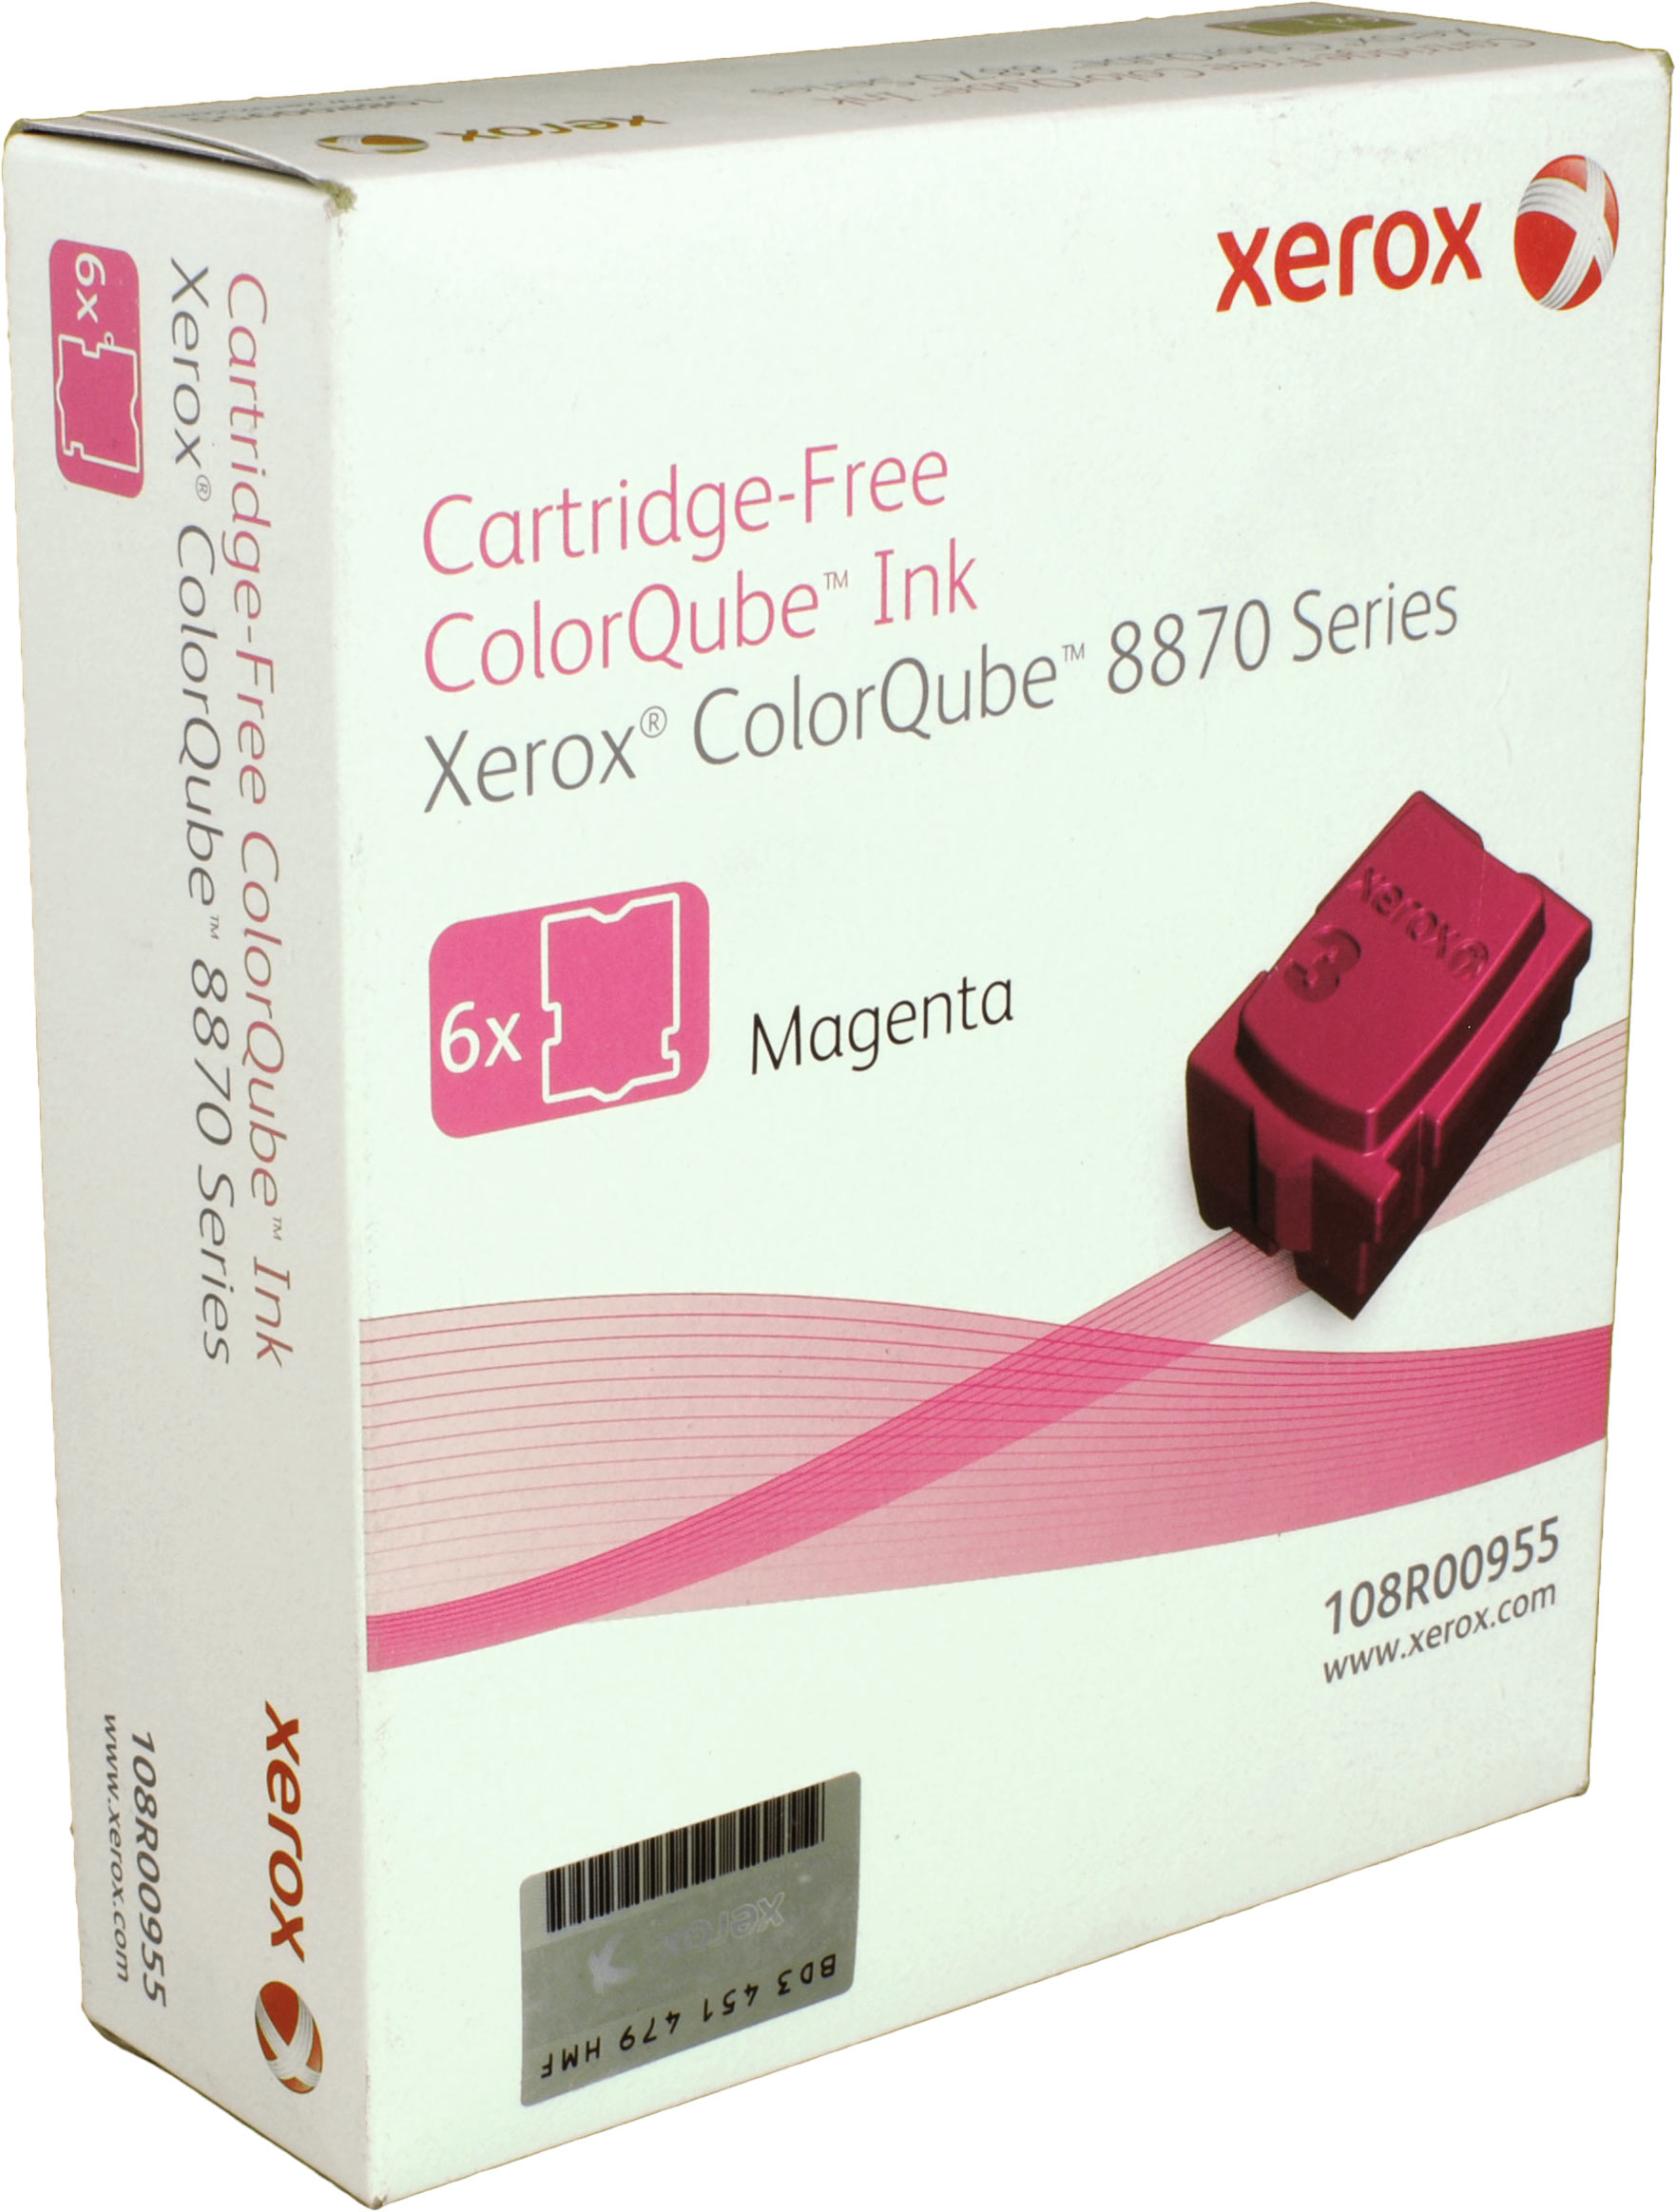 6 Xerox Colorsticks 108R00955 magenta